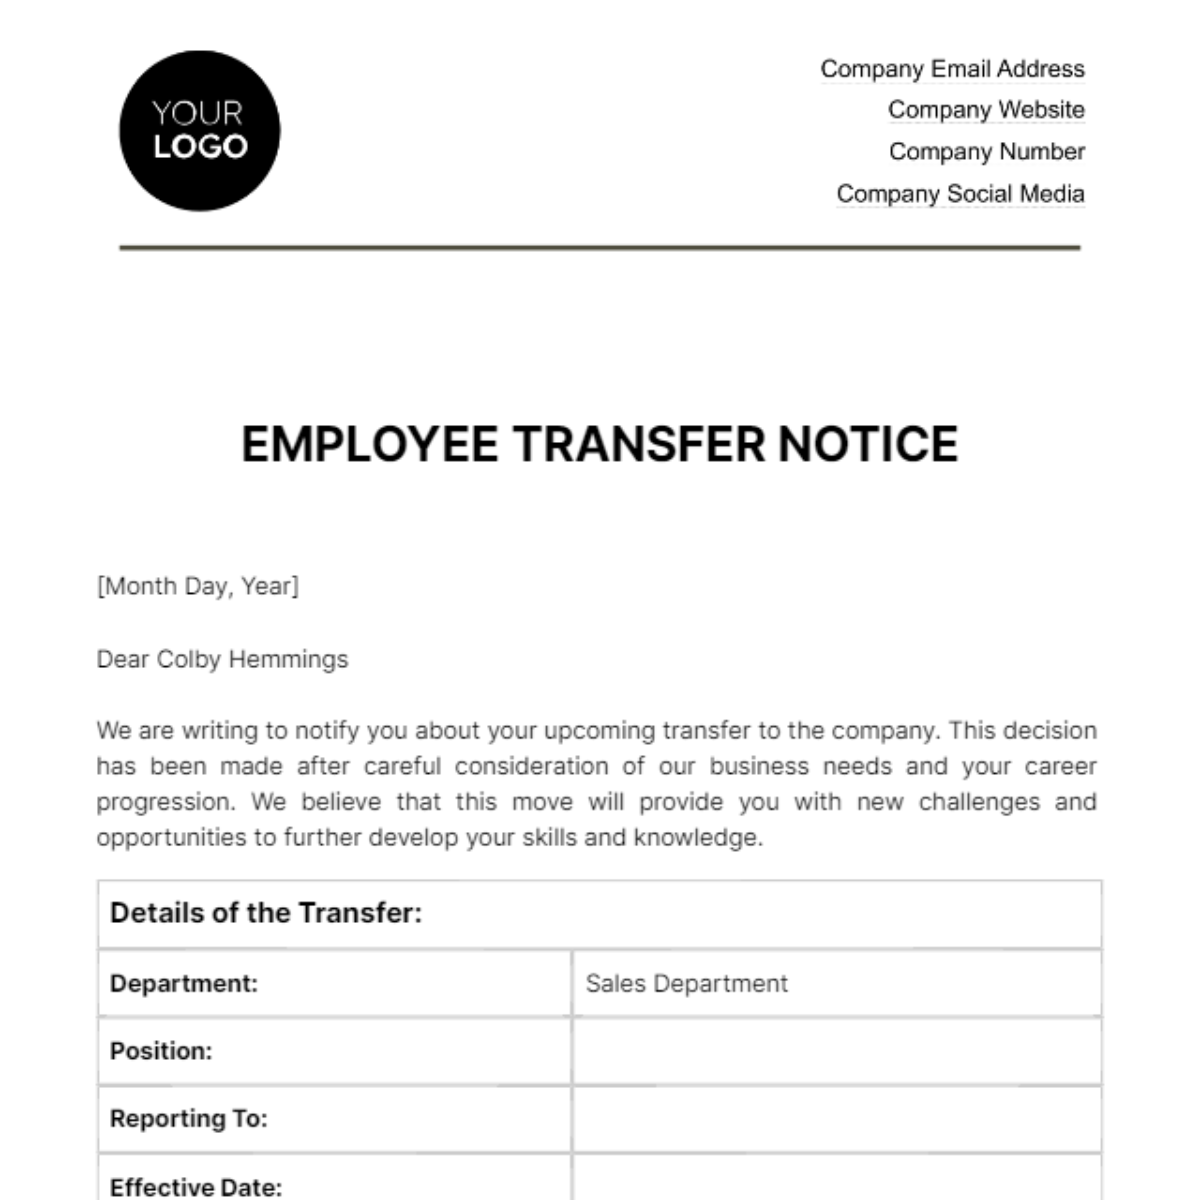 Employee Transfer Notice HR Template